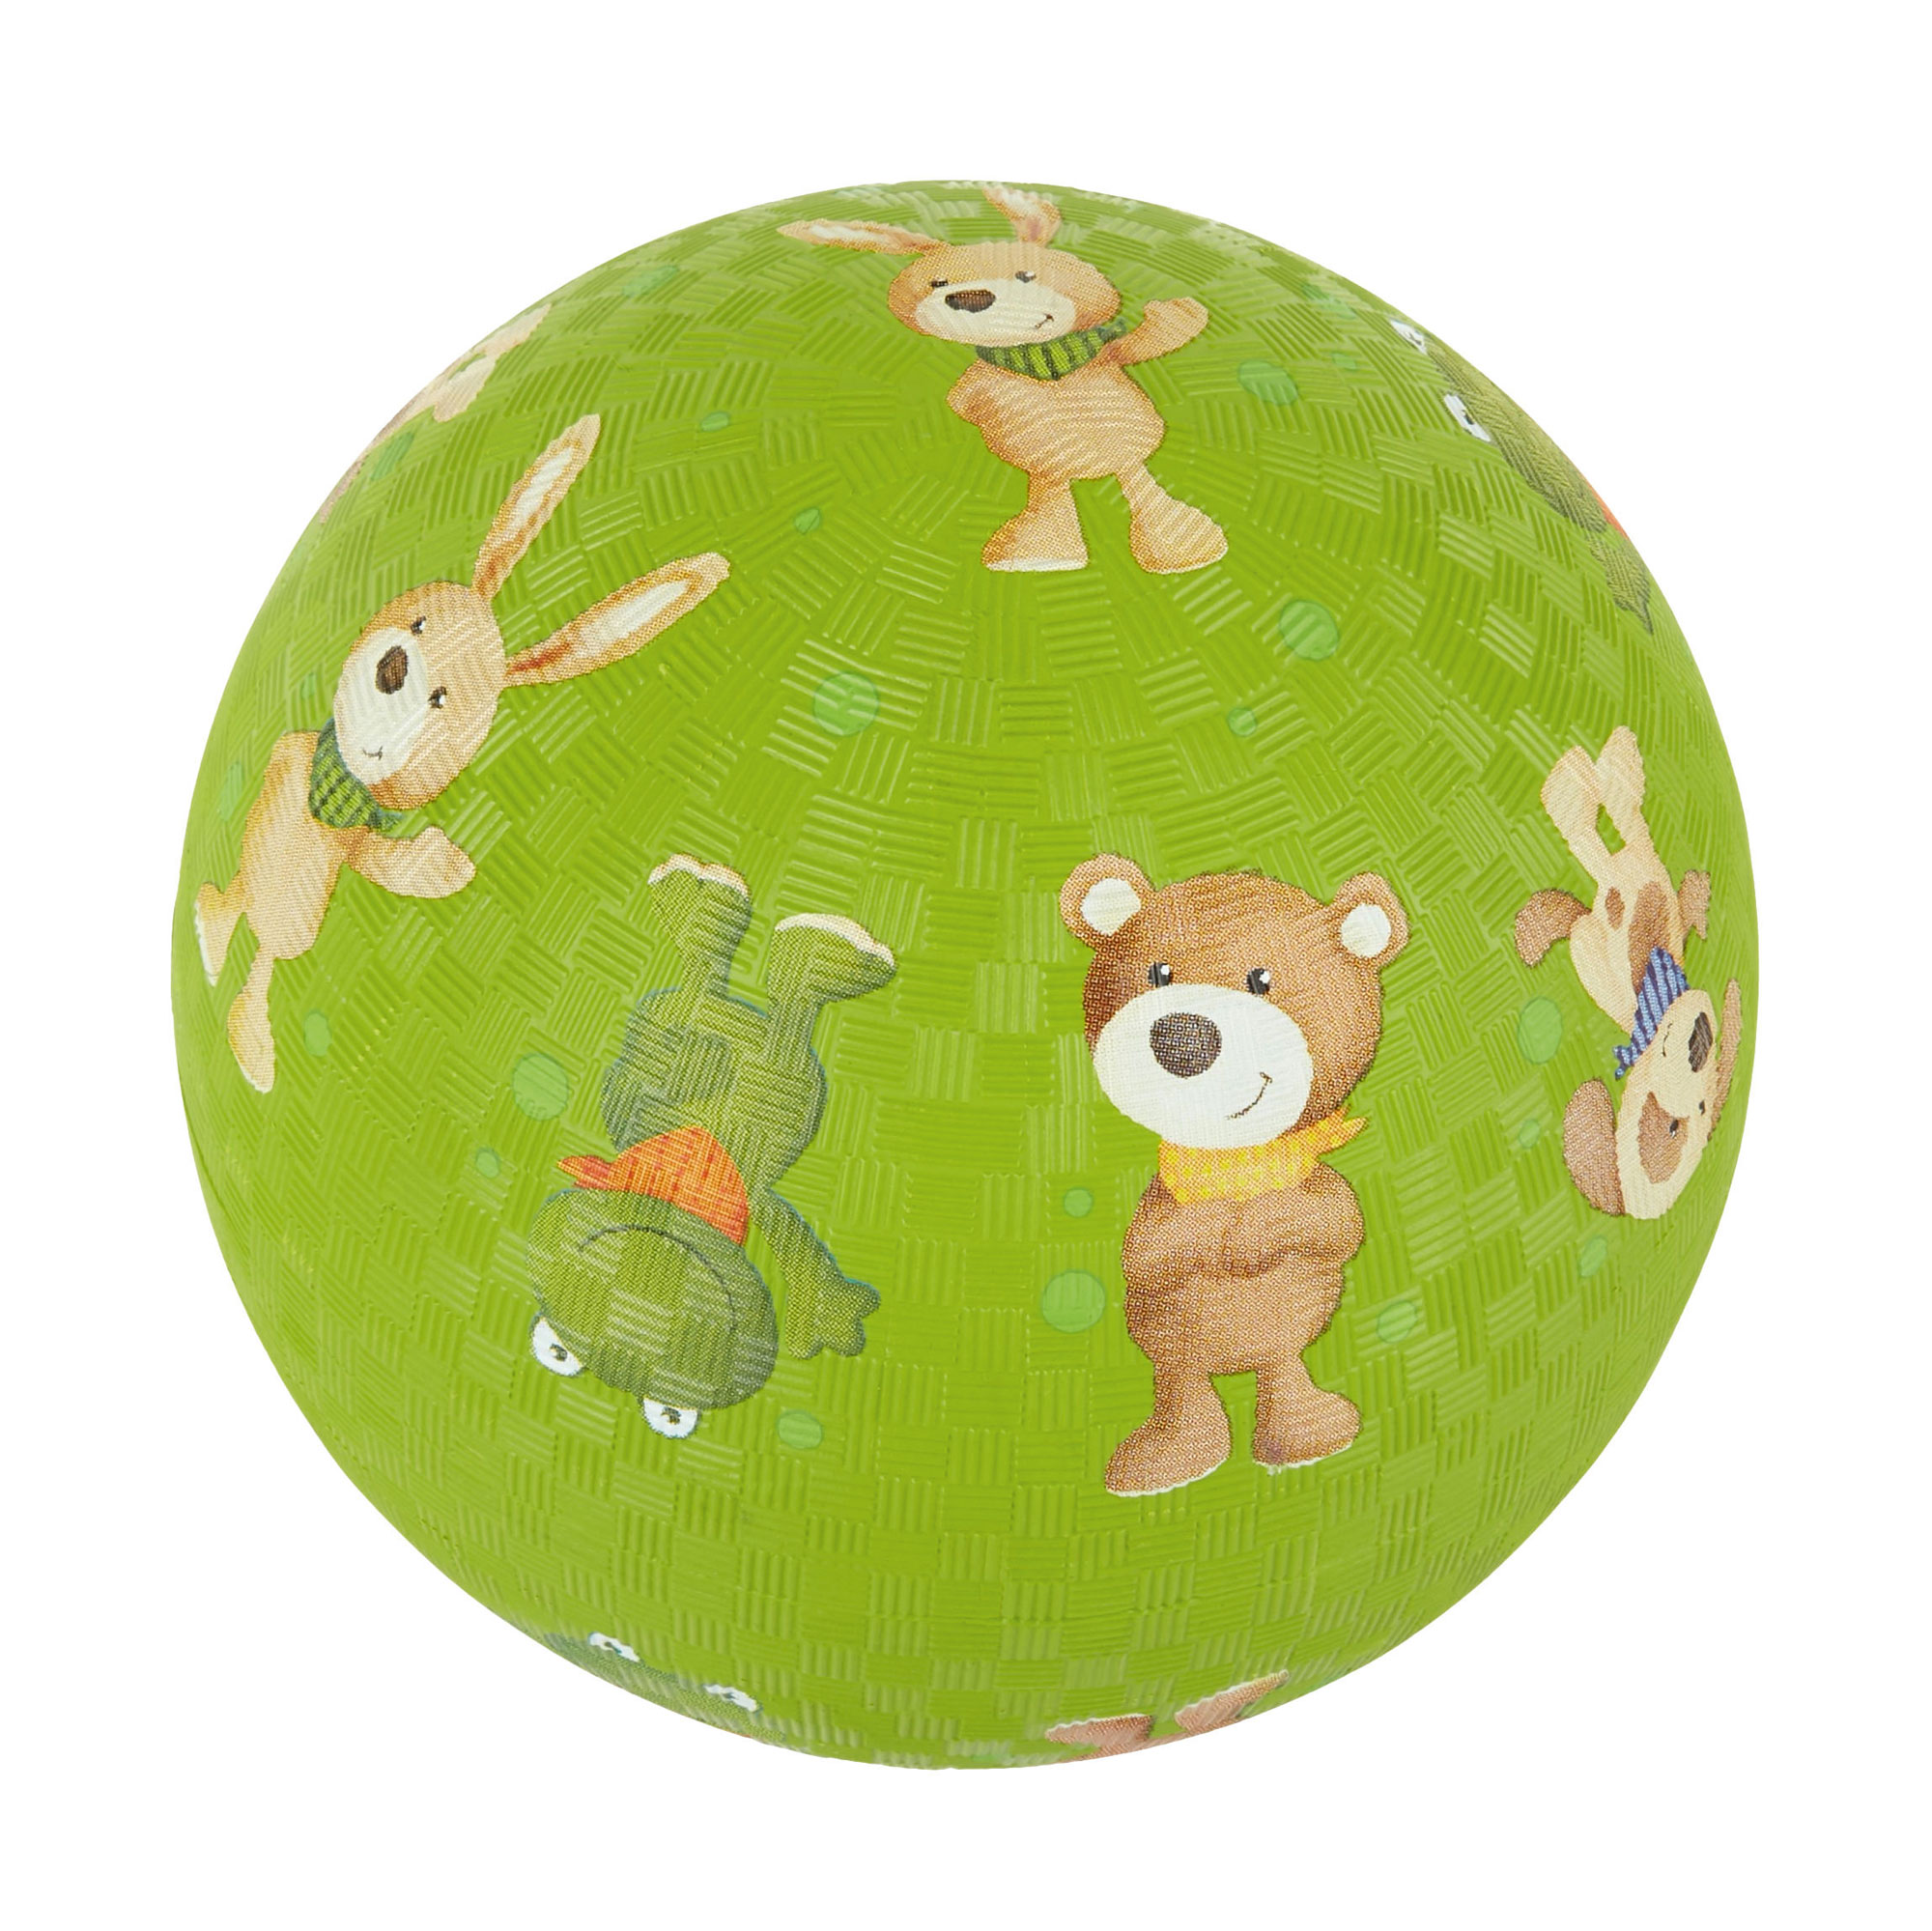 Caoutchouc ball cuddle cuties, green